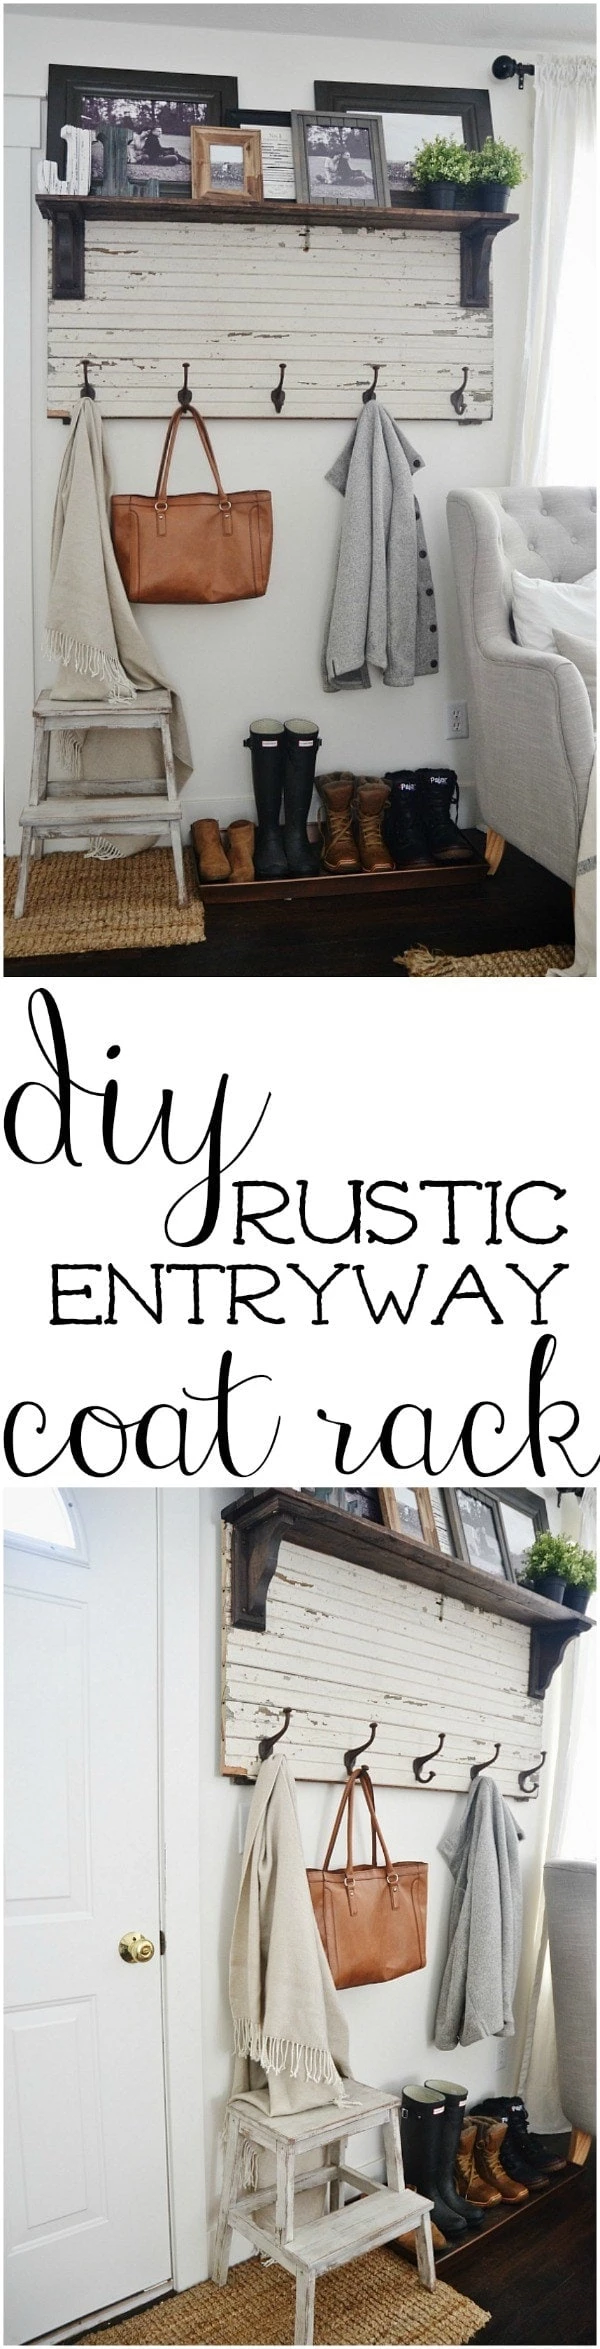 Rustic Entryway Coat Rack